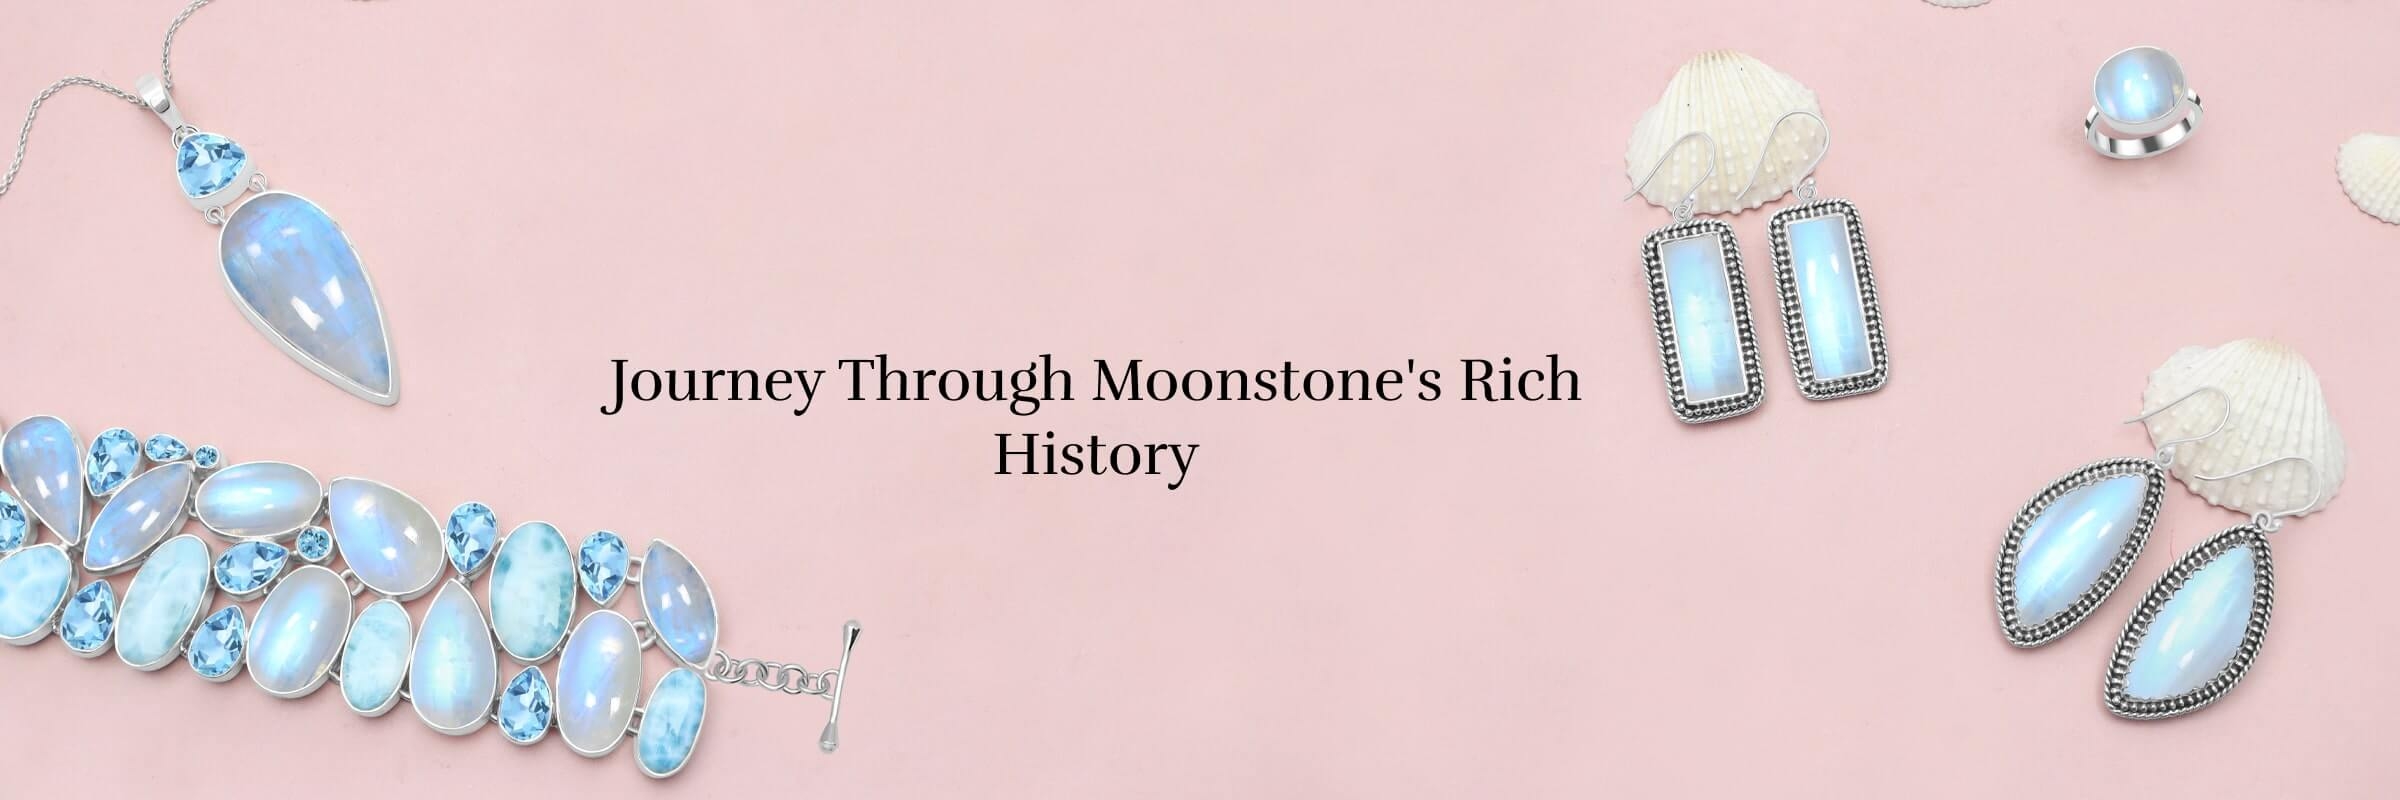 Moonstone History